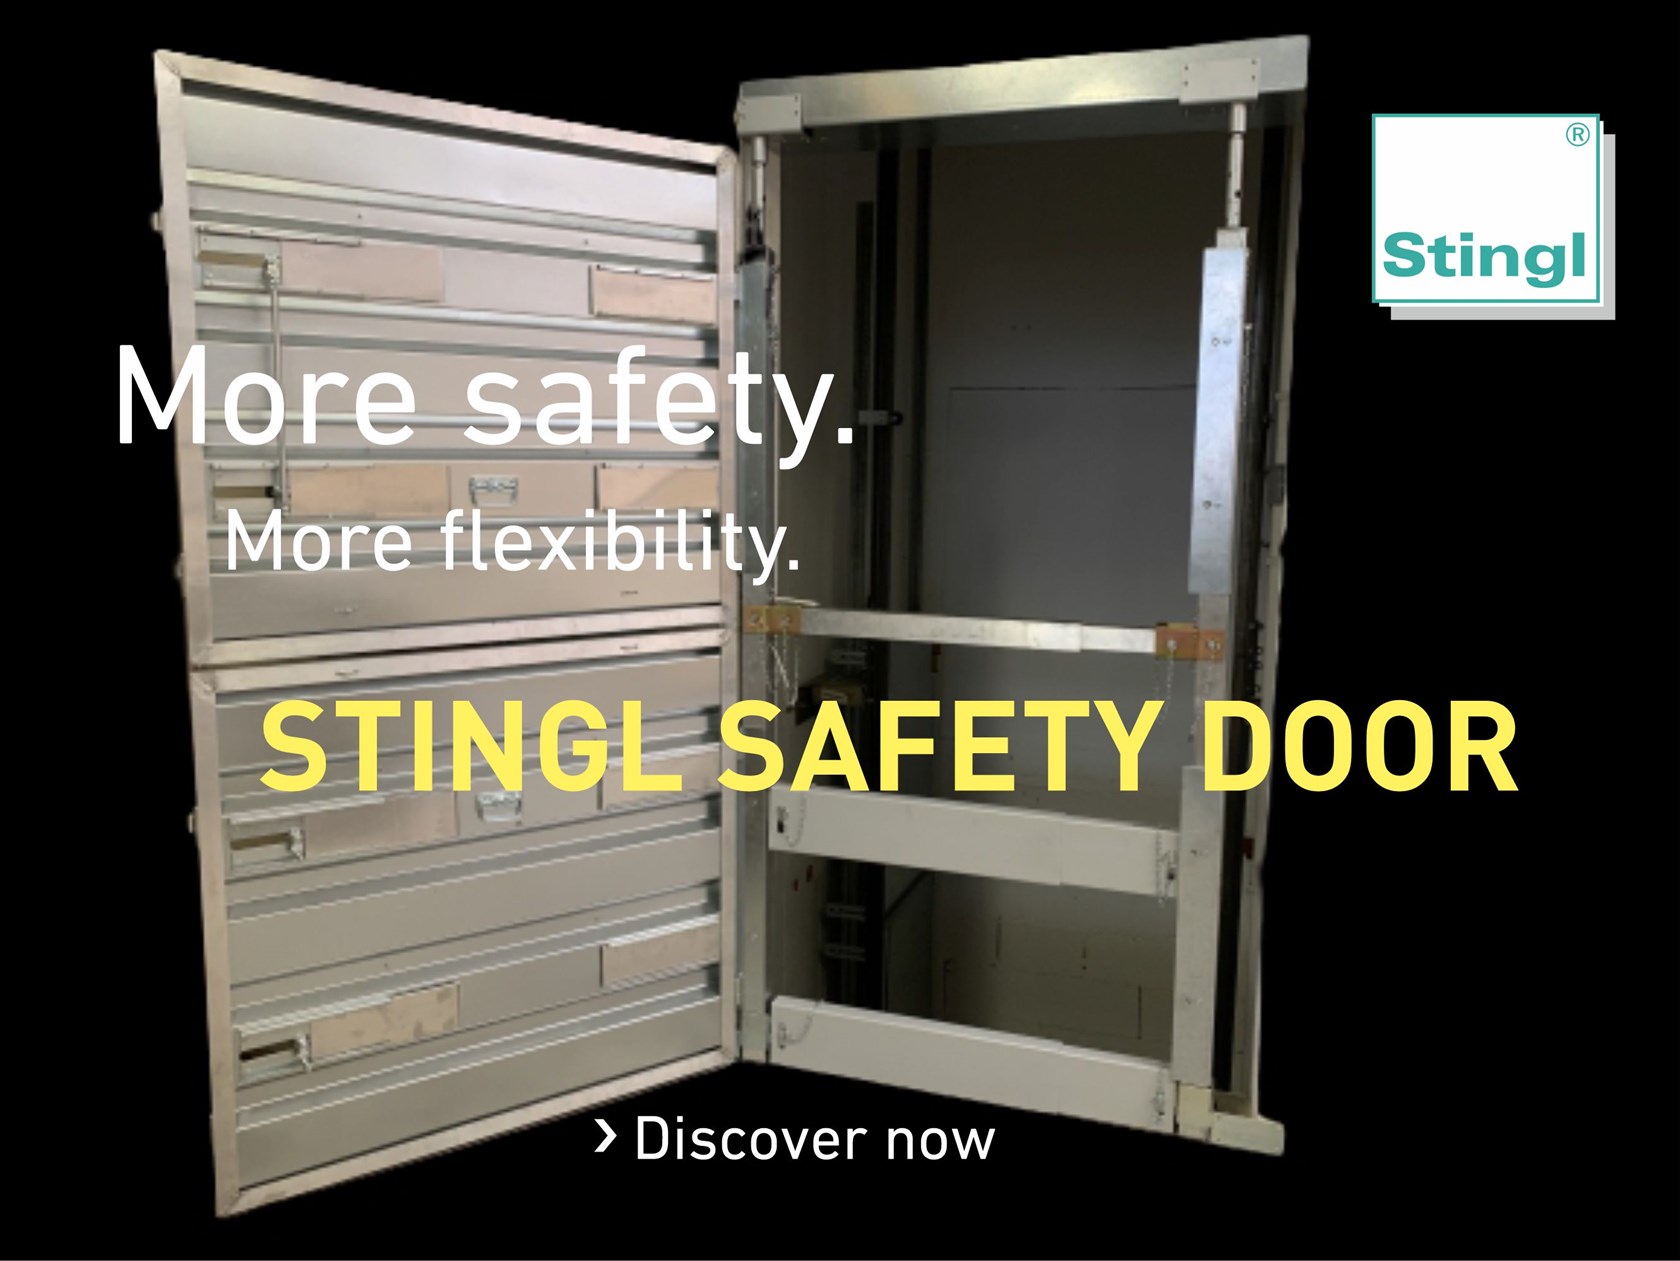 Stingl safety door